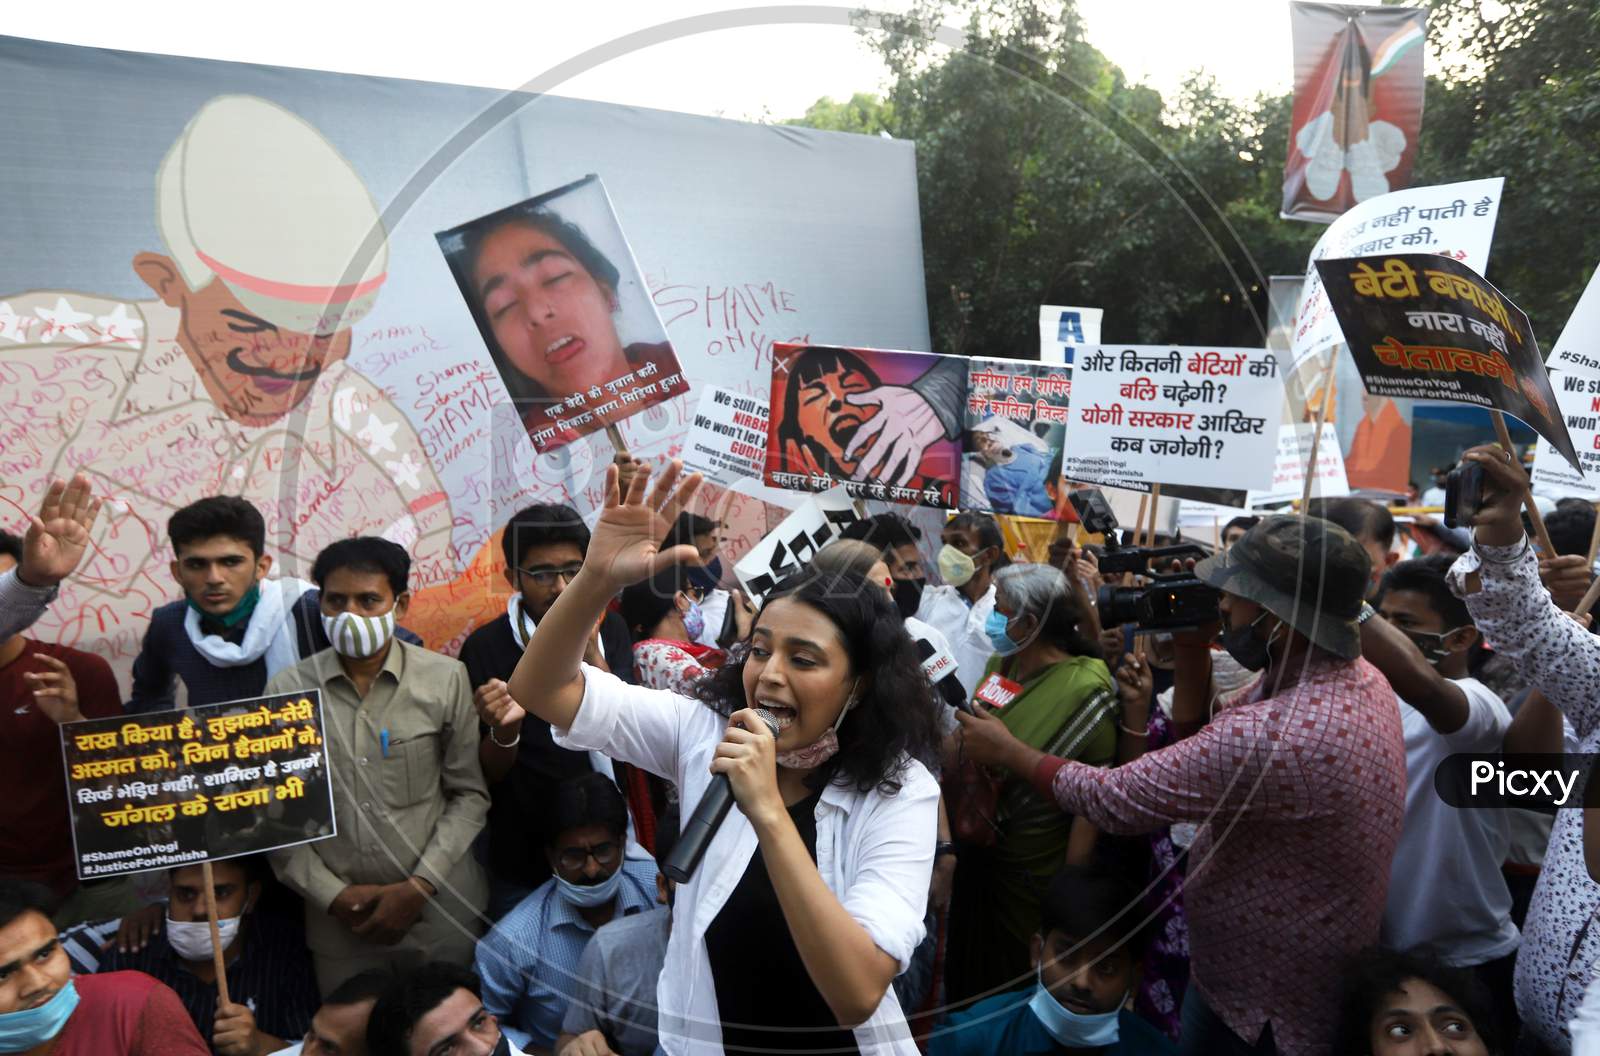 Bollywood actress Swara Bhaskar shouts slogan at the Citizen's protest to demand justice for Hathras victim, at Jantar Mantar, on October 2, 2020 in New Delhi, India.